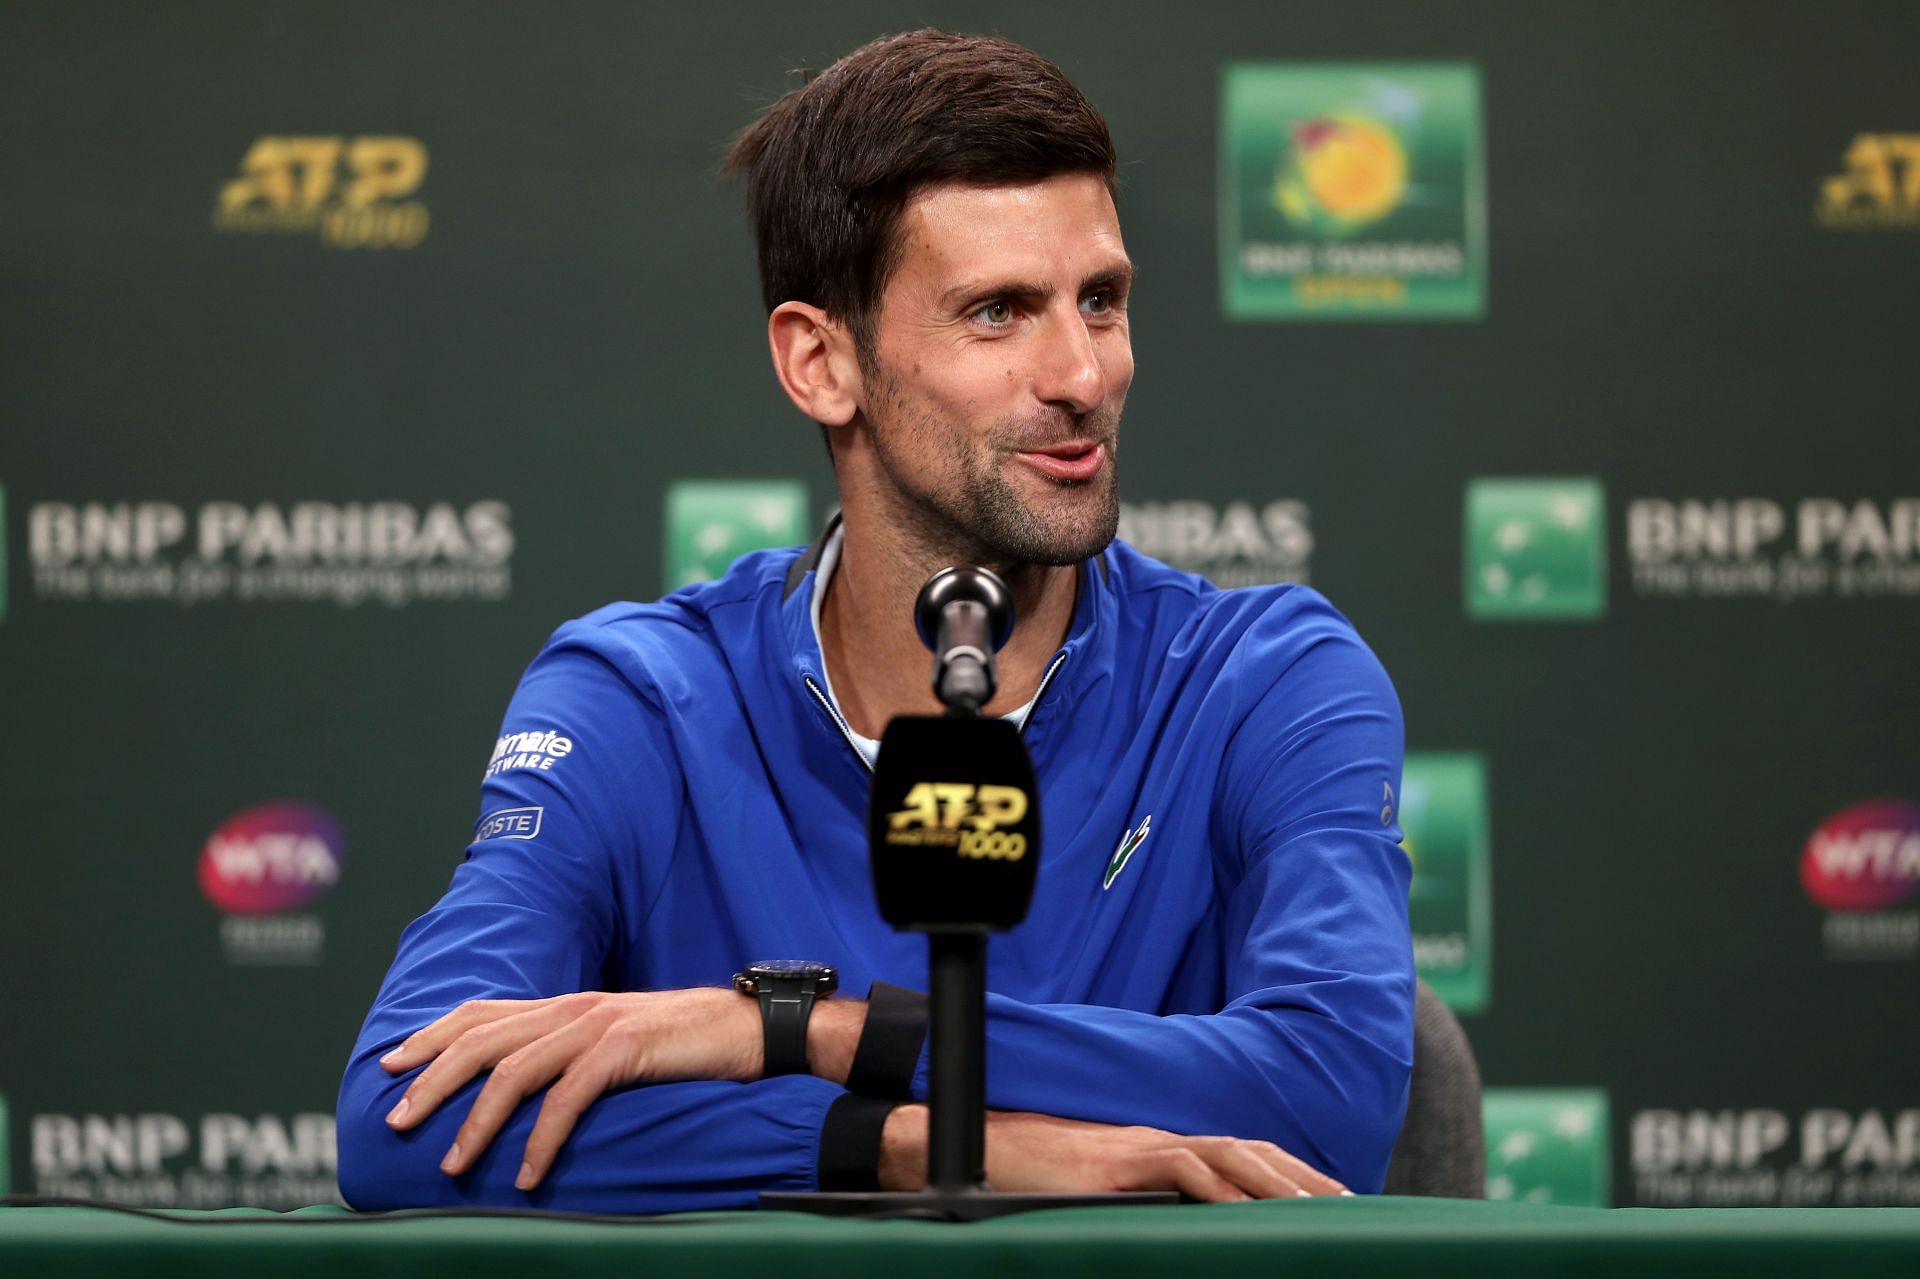 Novak Djokovic at the 2019 BNP Paribas Open in Indian Wells - Getty Images